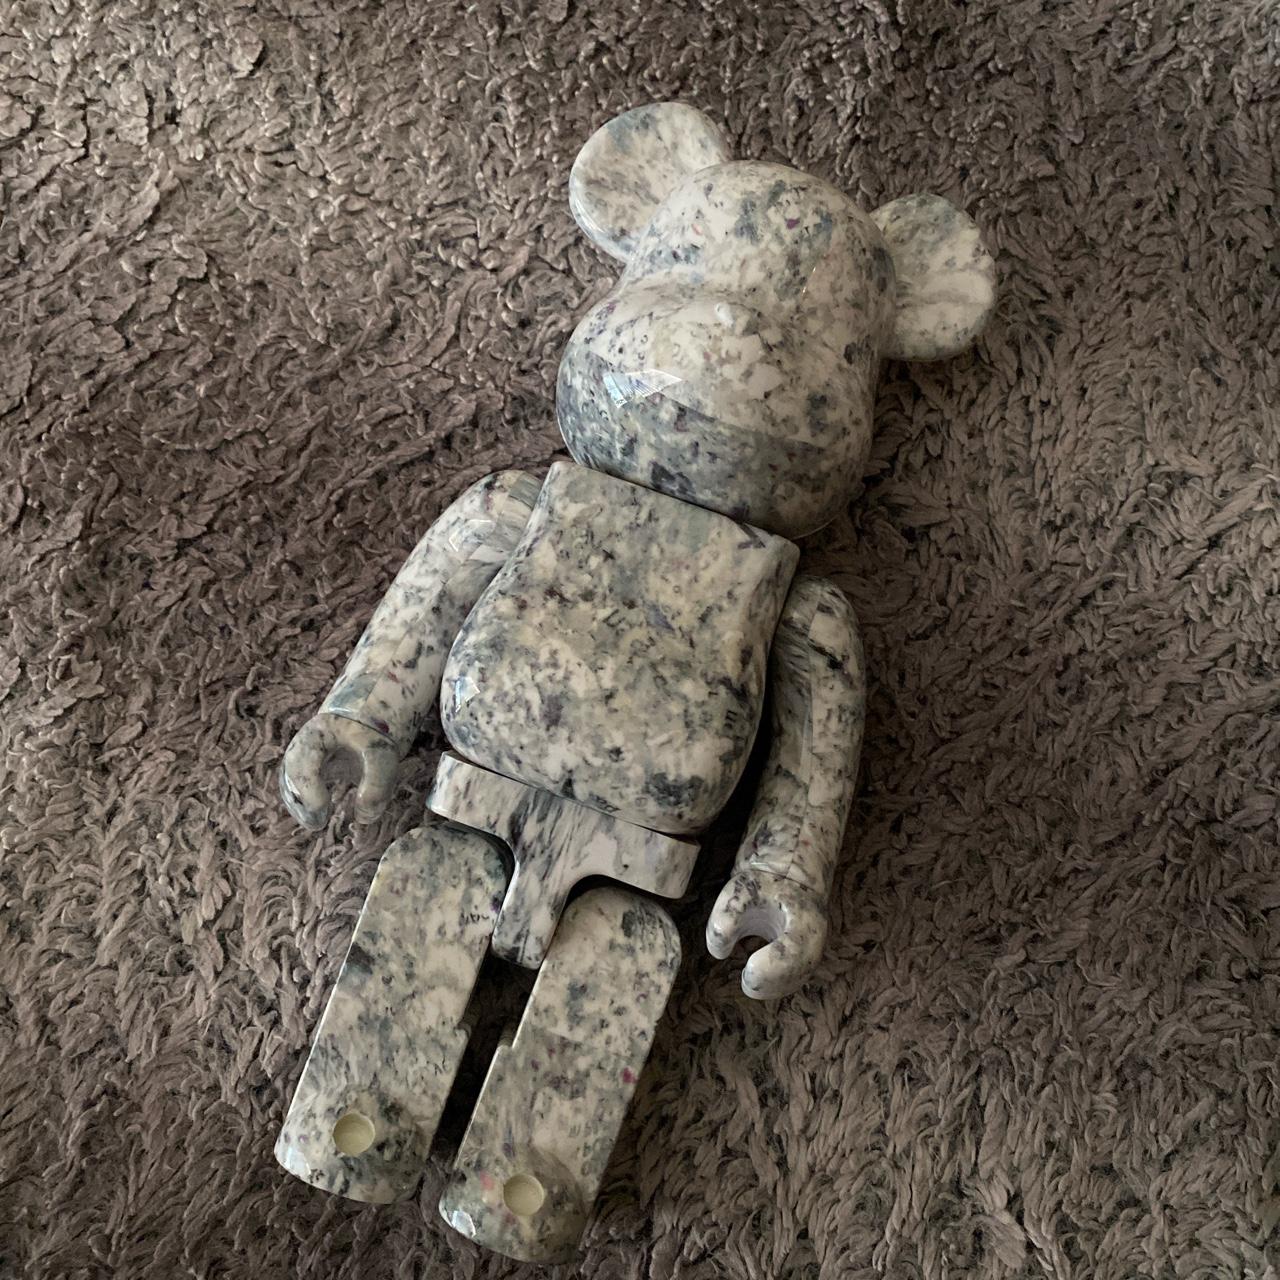 Medicom Bear brick 400% Toy, Osbbat collab very rare